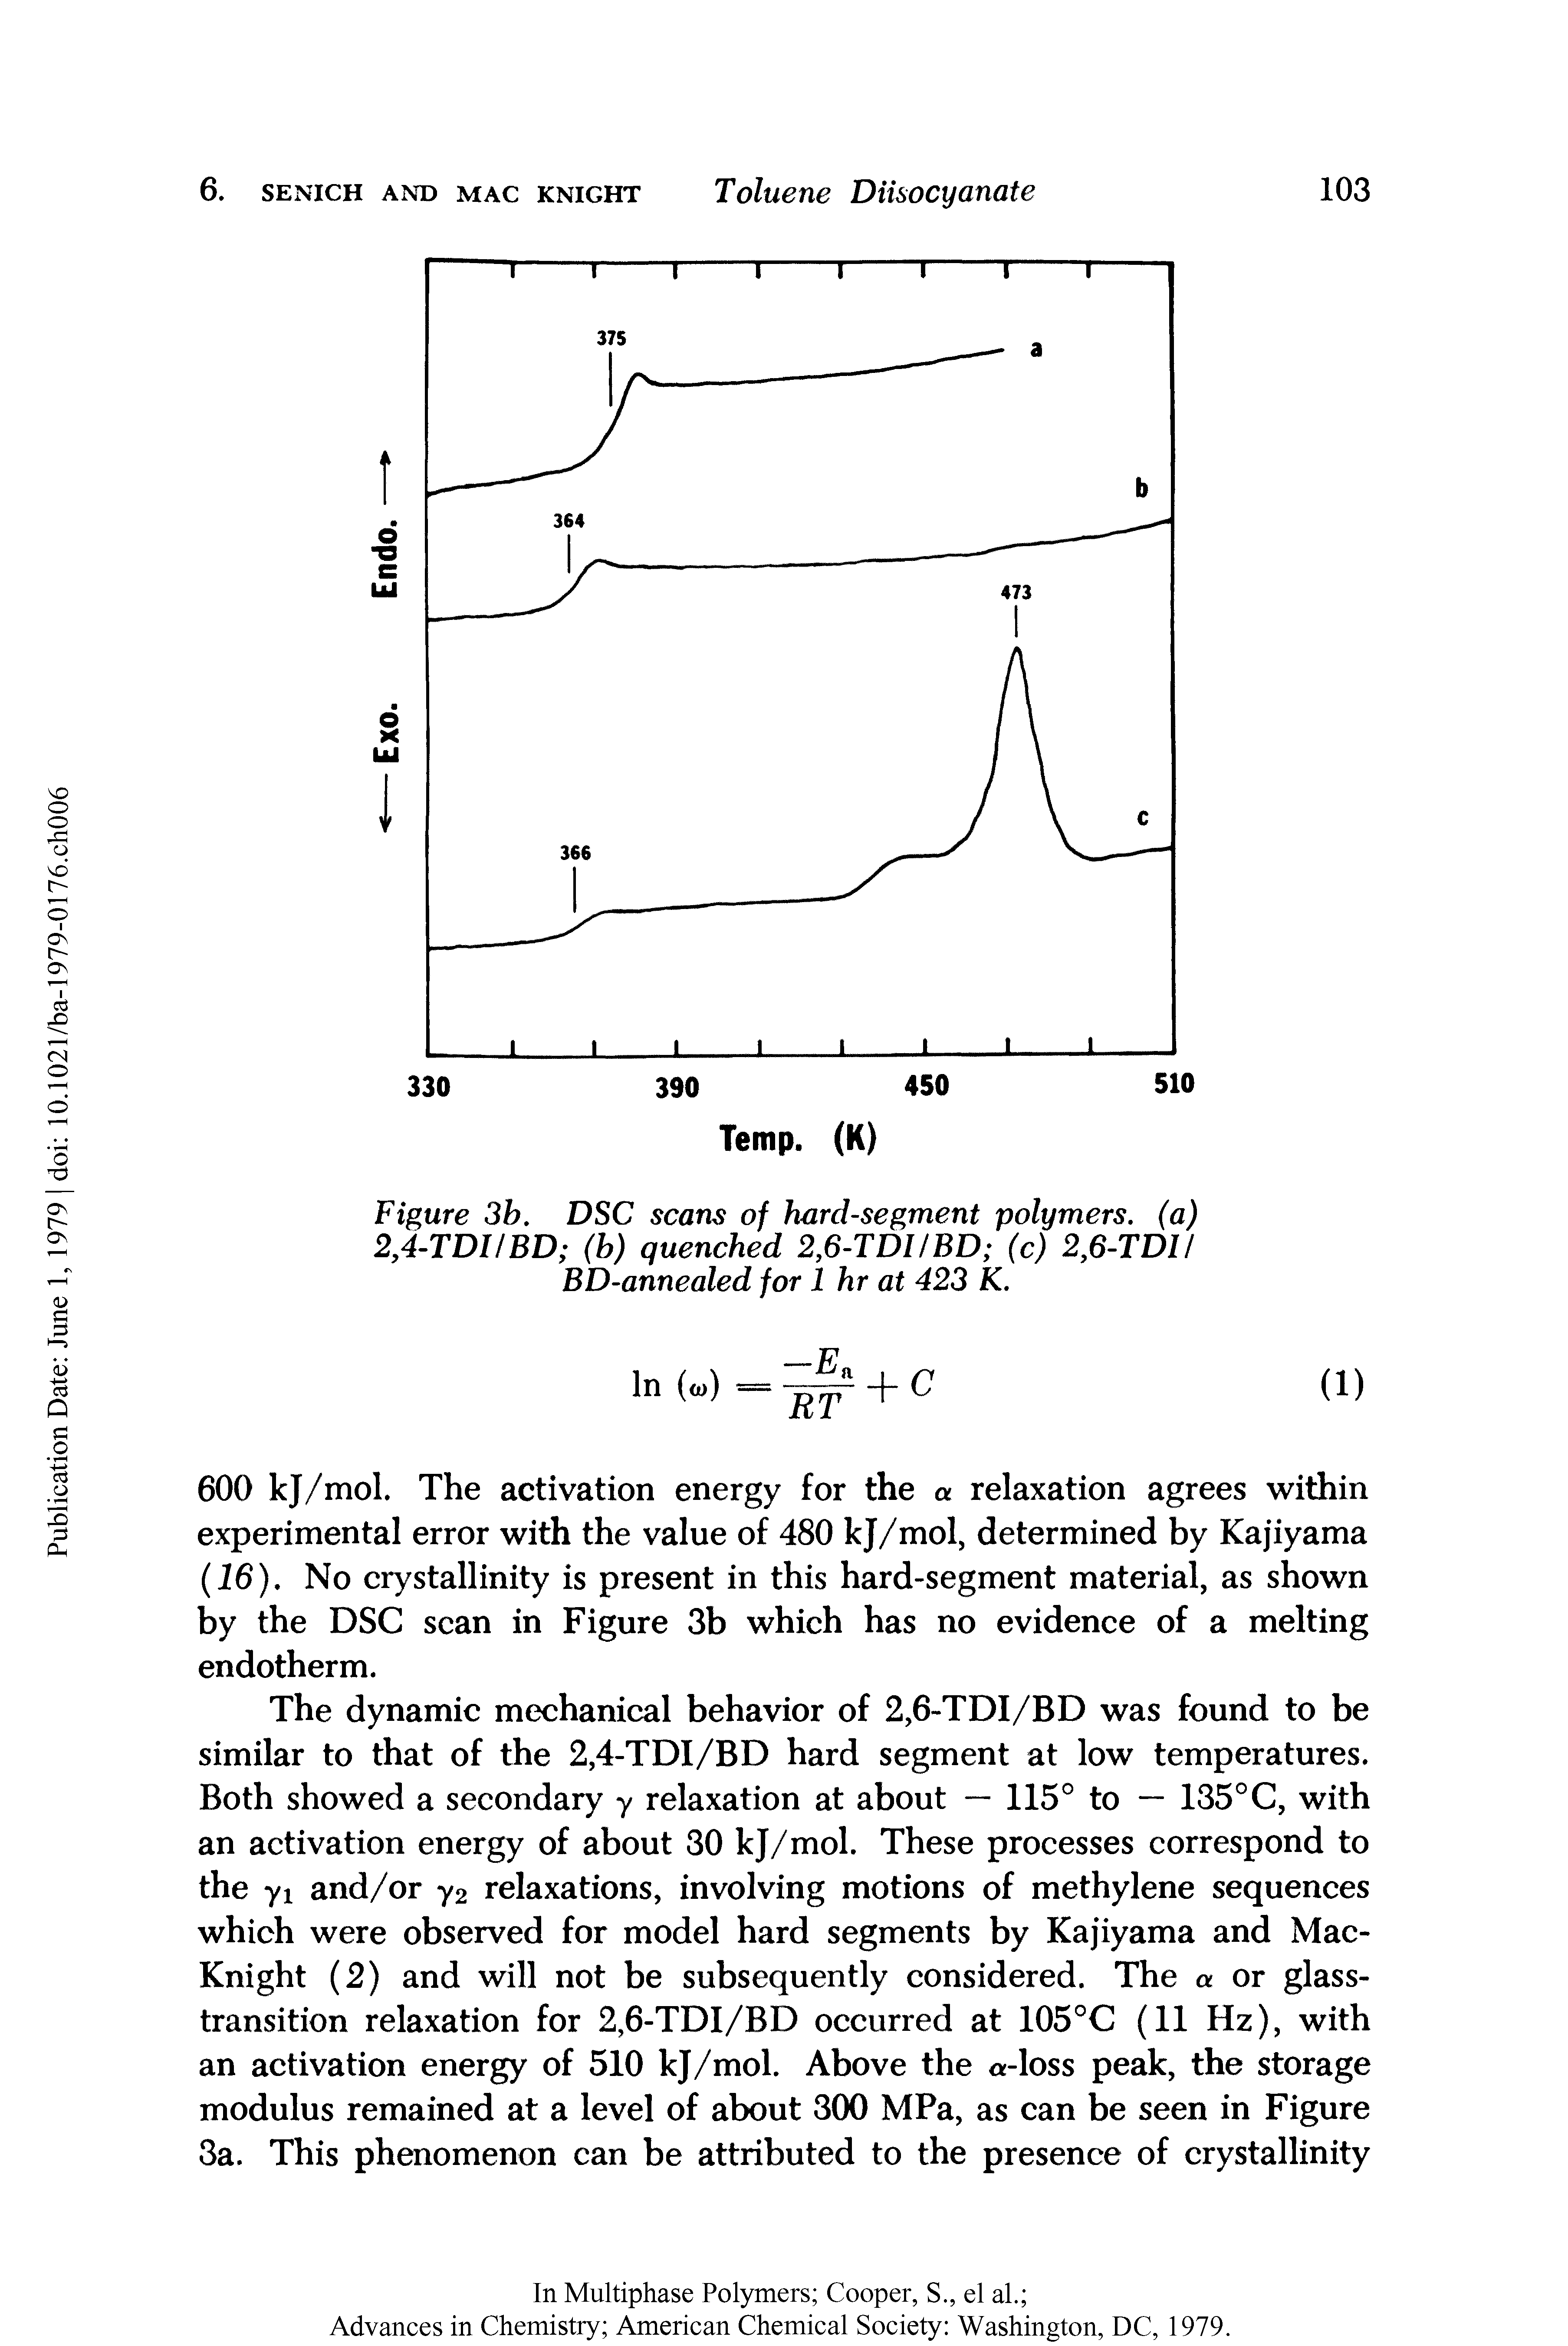 Figure 3b. DSC scans of hard-segment polymers, (a) 2,4-TDHBD (b) quenched 2,6-TDI/BD (c) 2,6-TDl/ BD-annealed for 1 hr at 423 K.